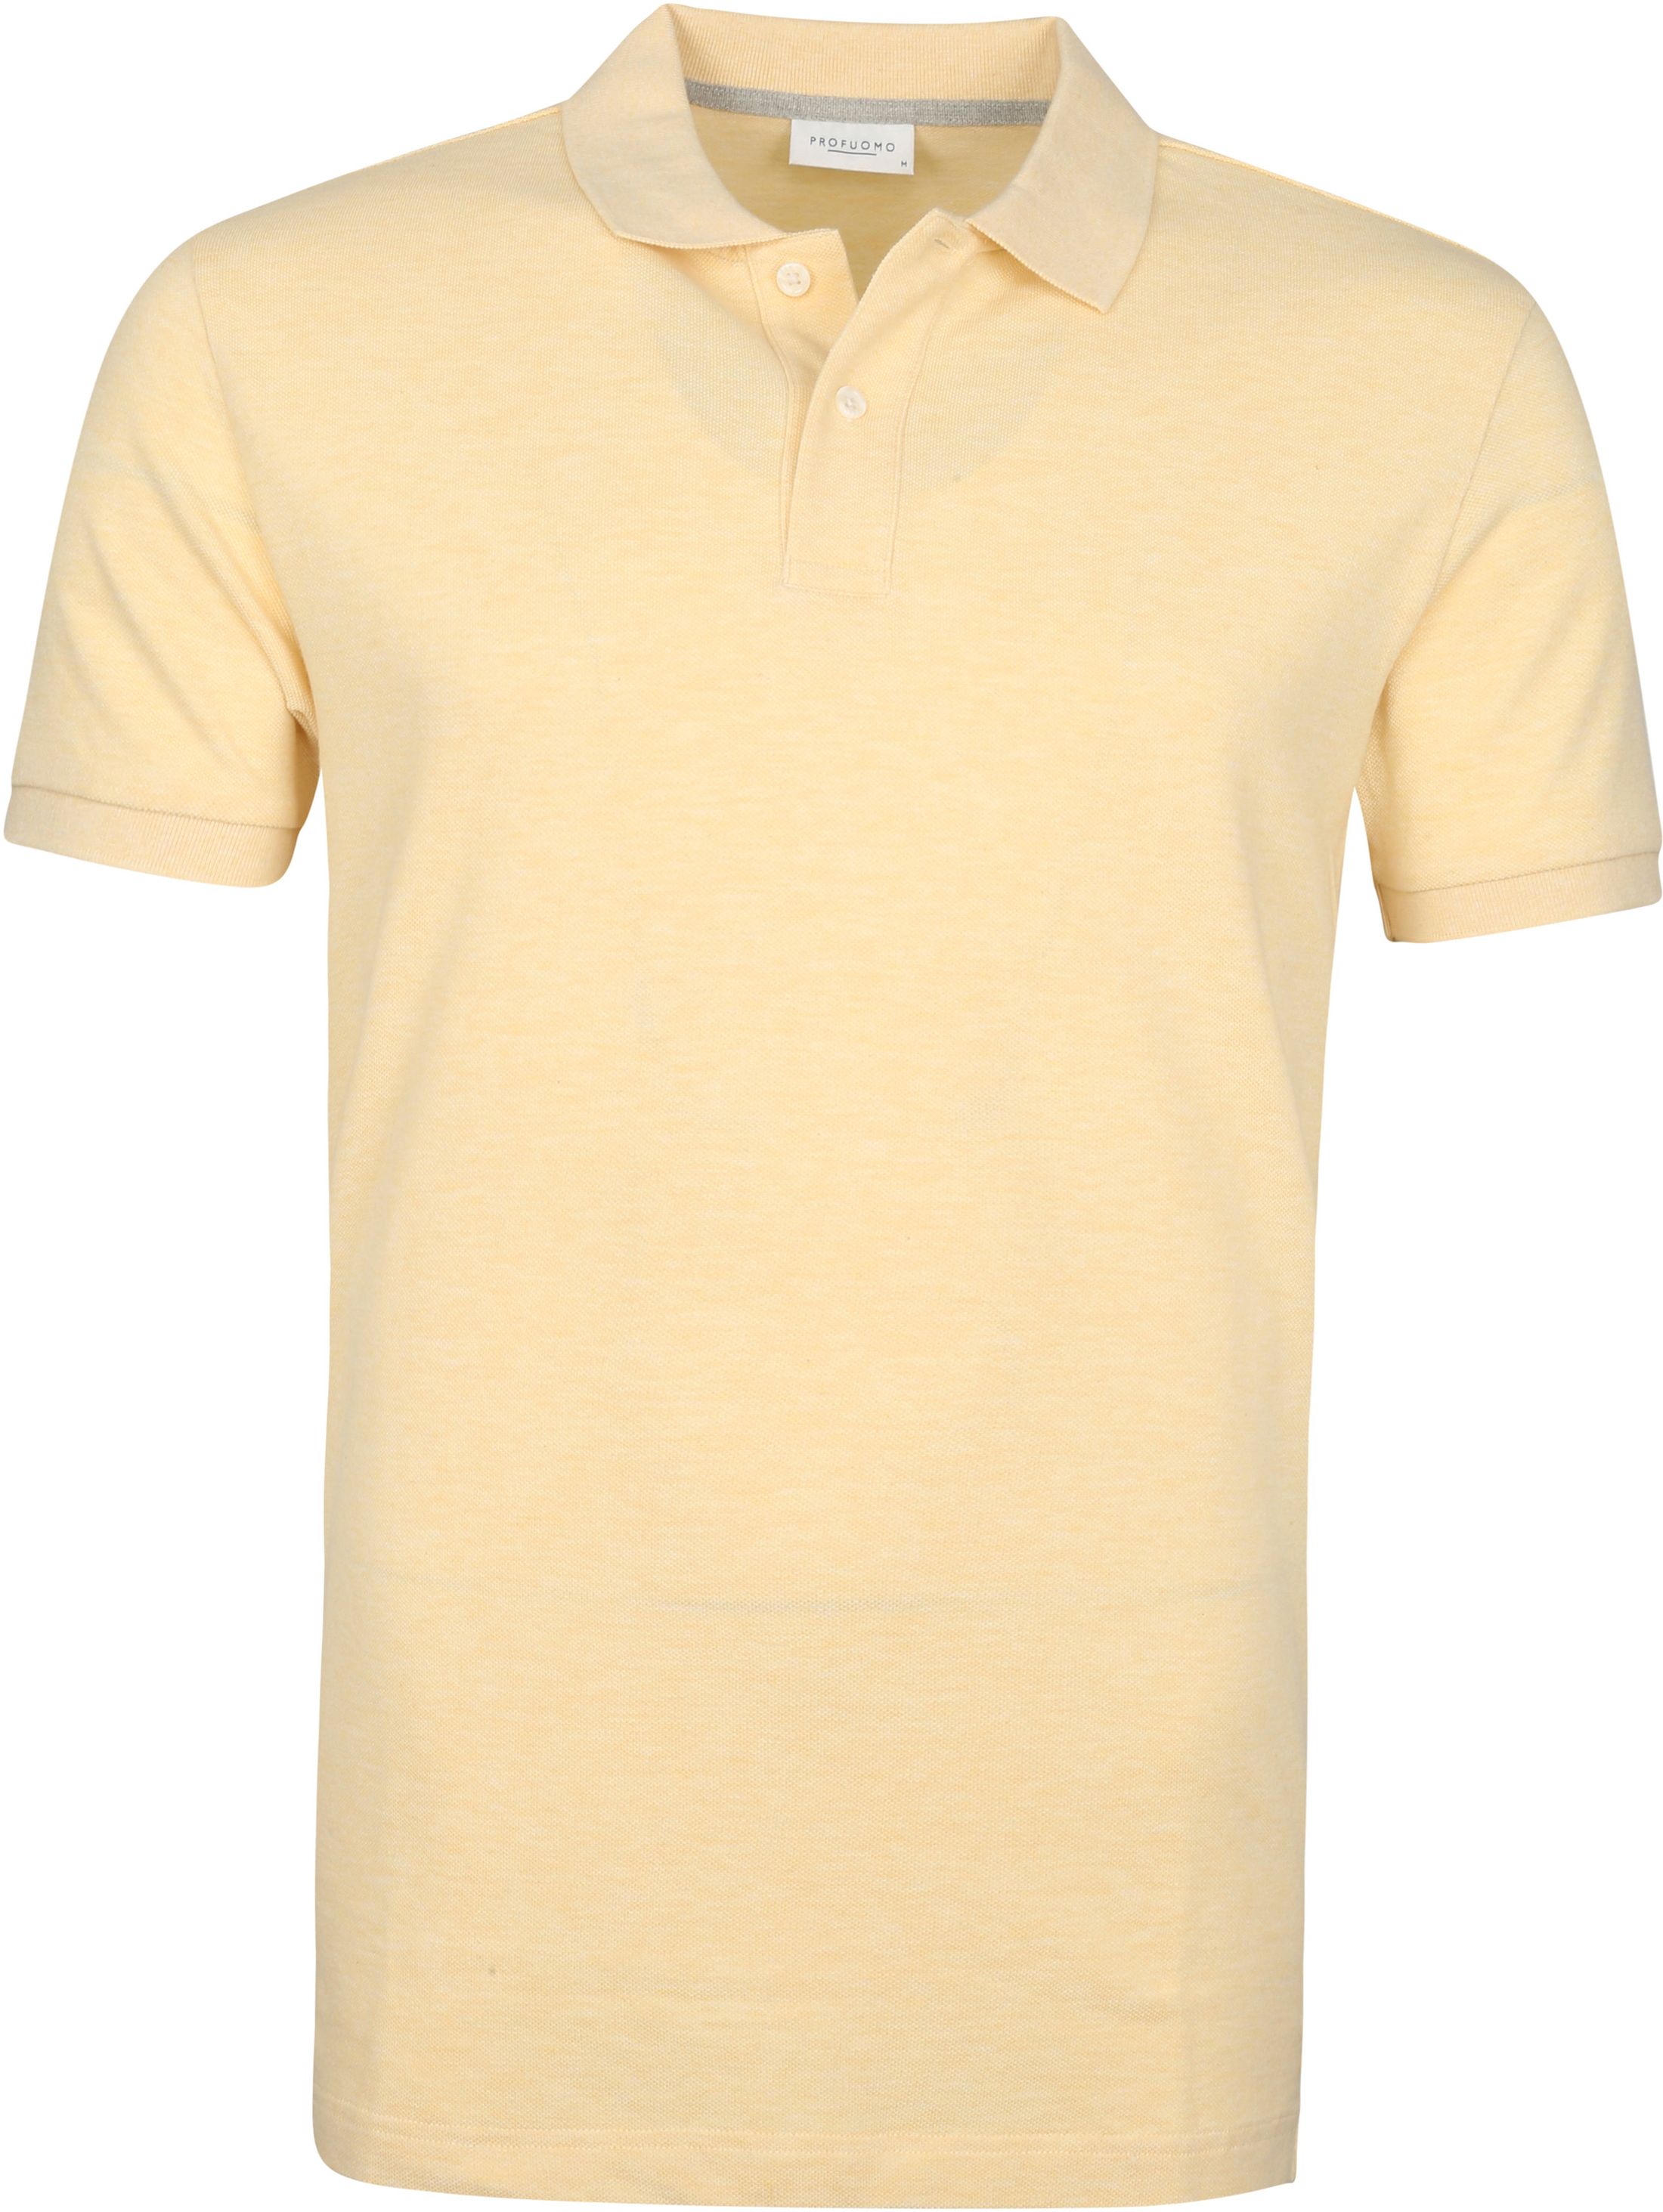 Profuomo Pique Polo Shirt Yellow size L